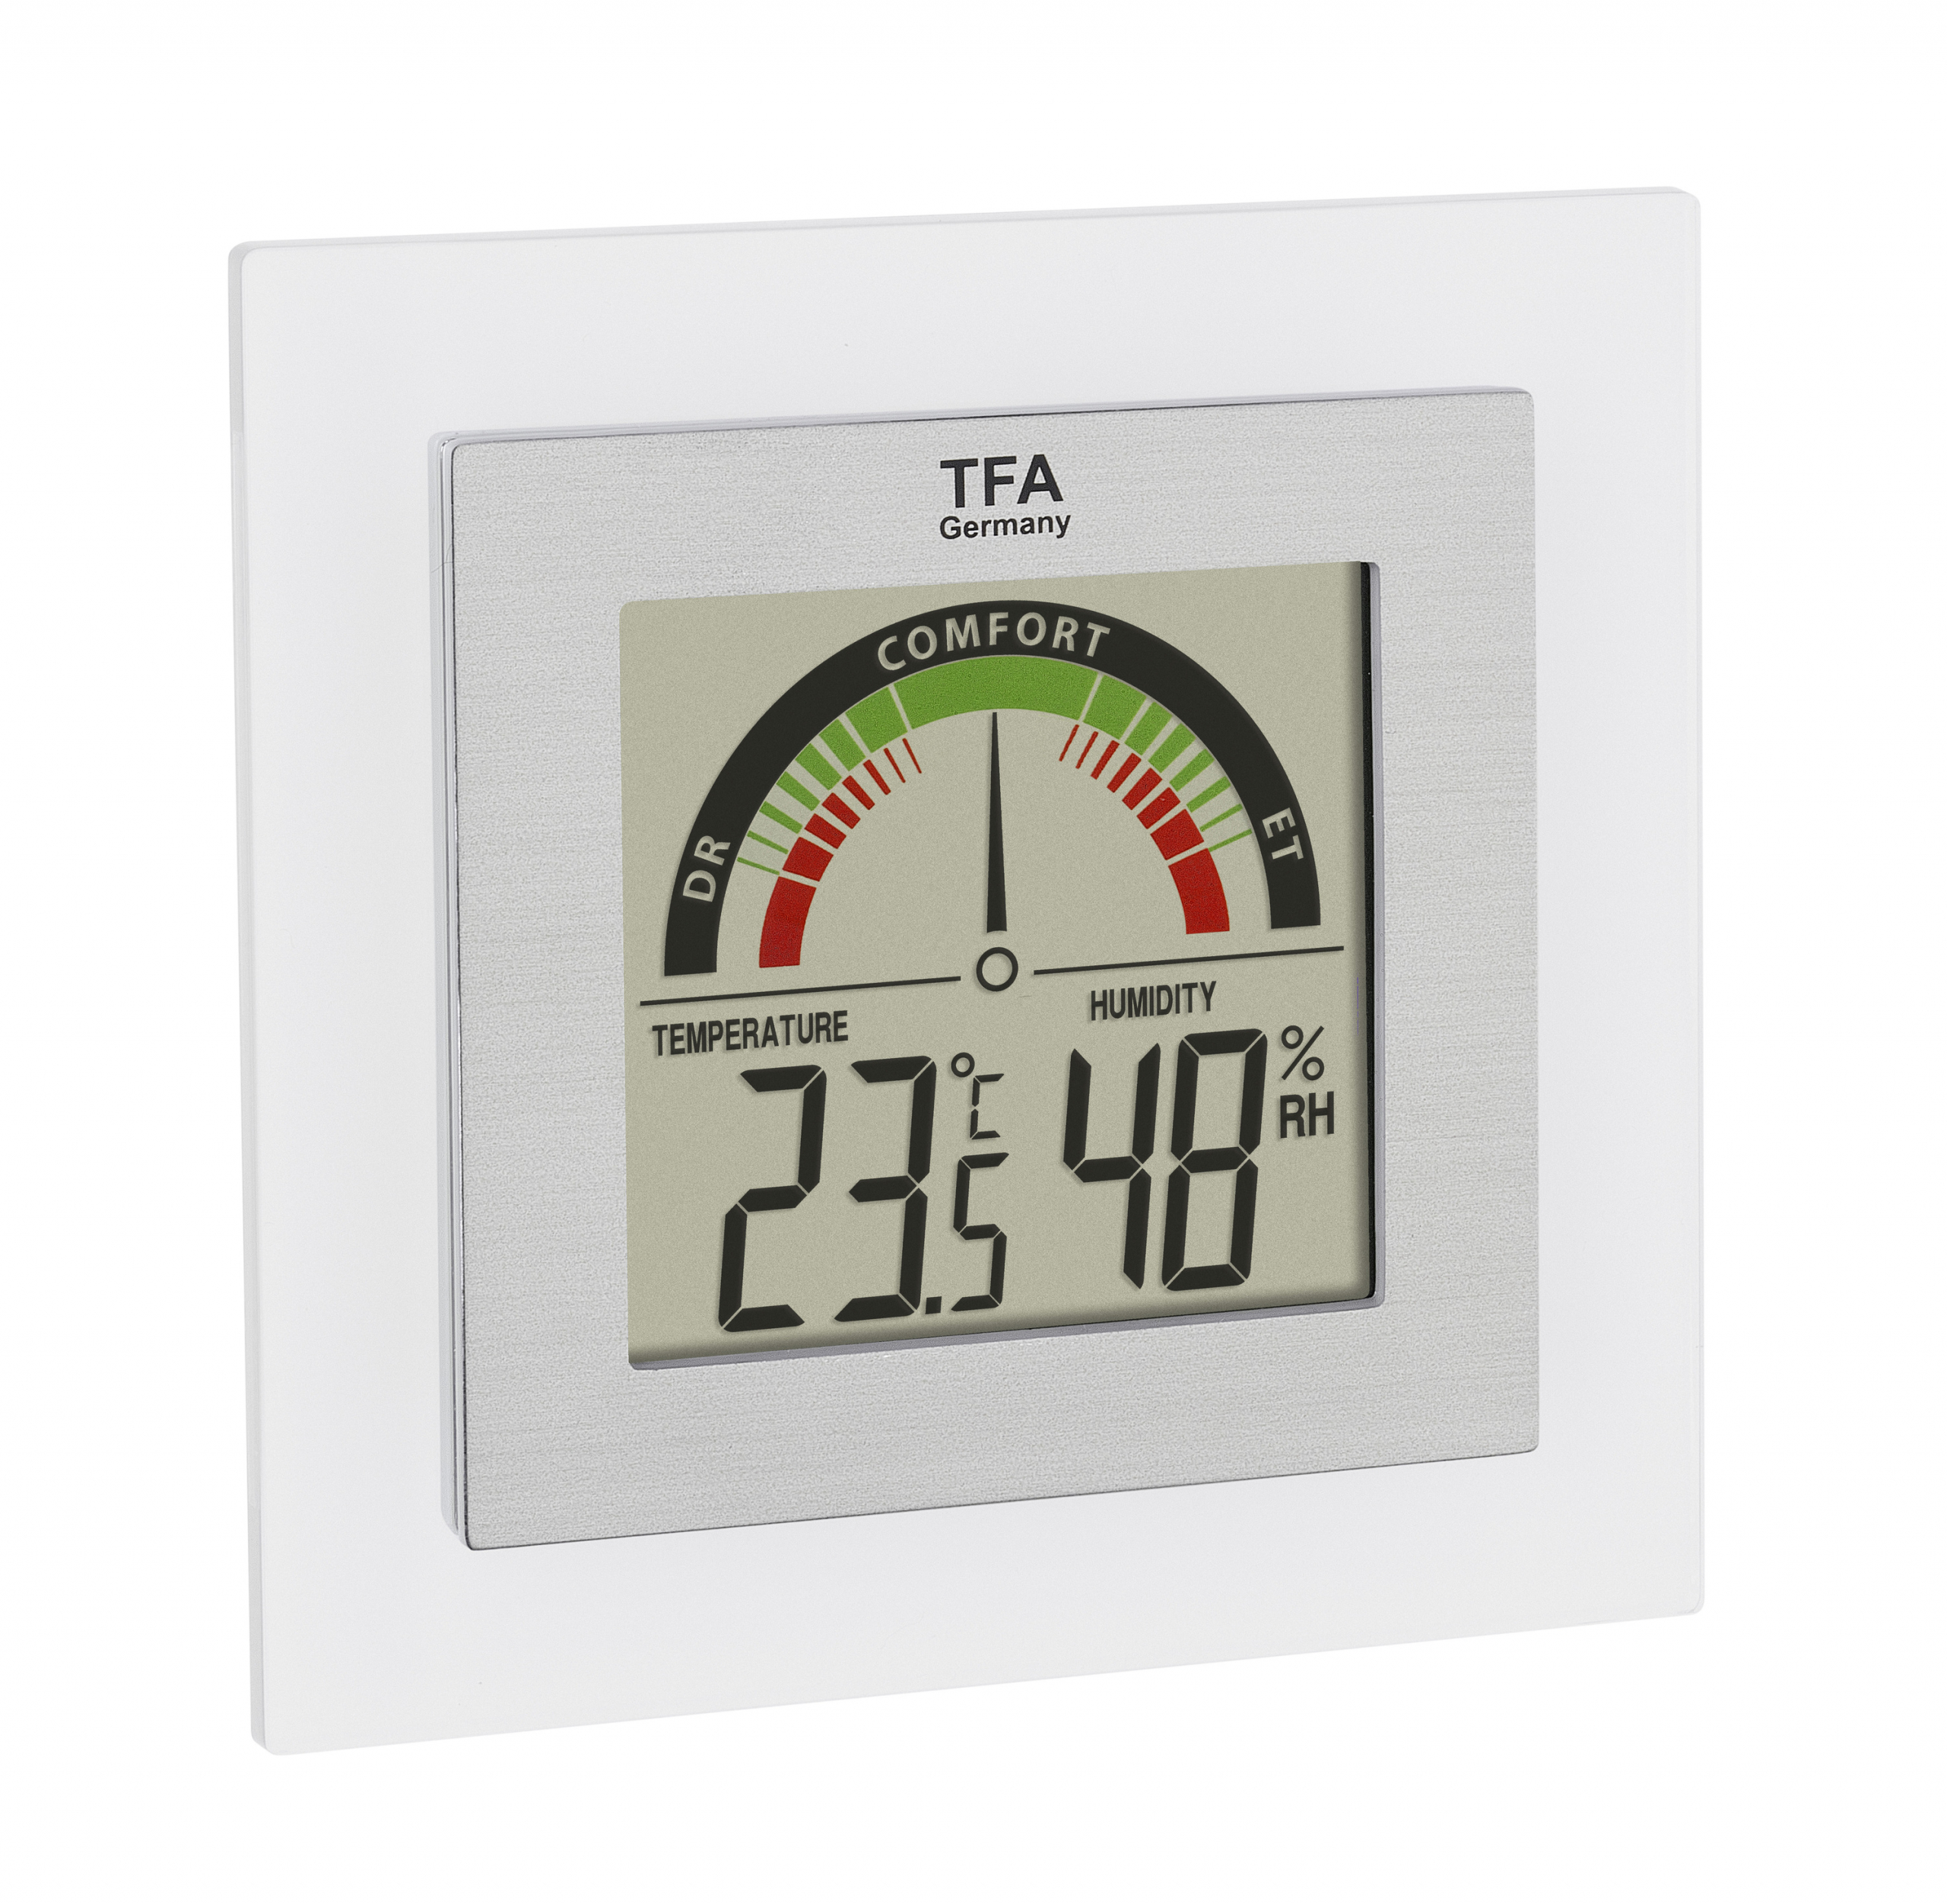 TFA DOSTMANN TFA DOSTMANN - Thermo-/Hygrometer D…